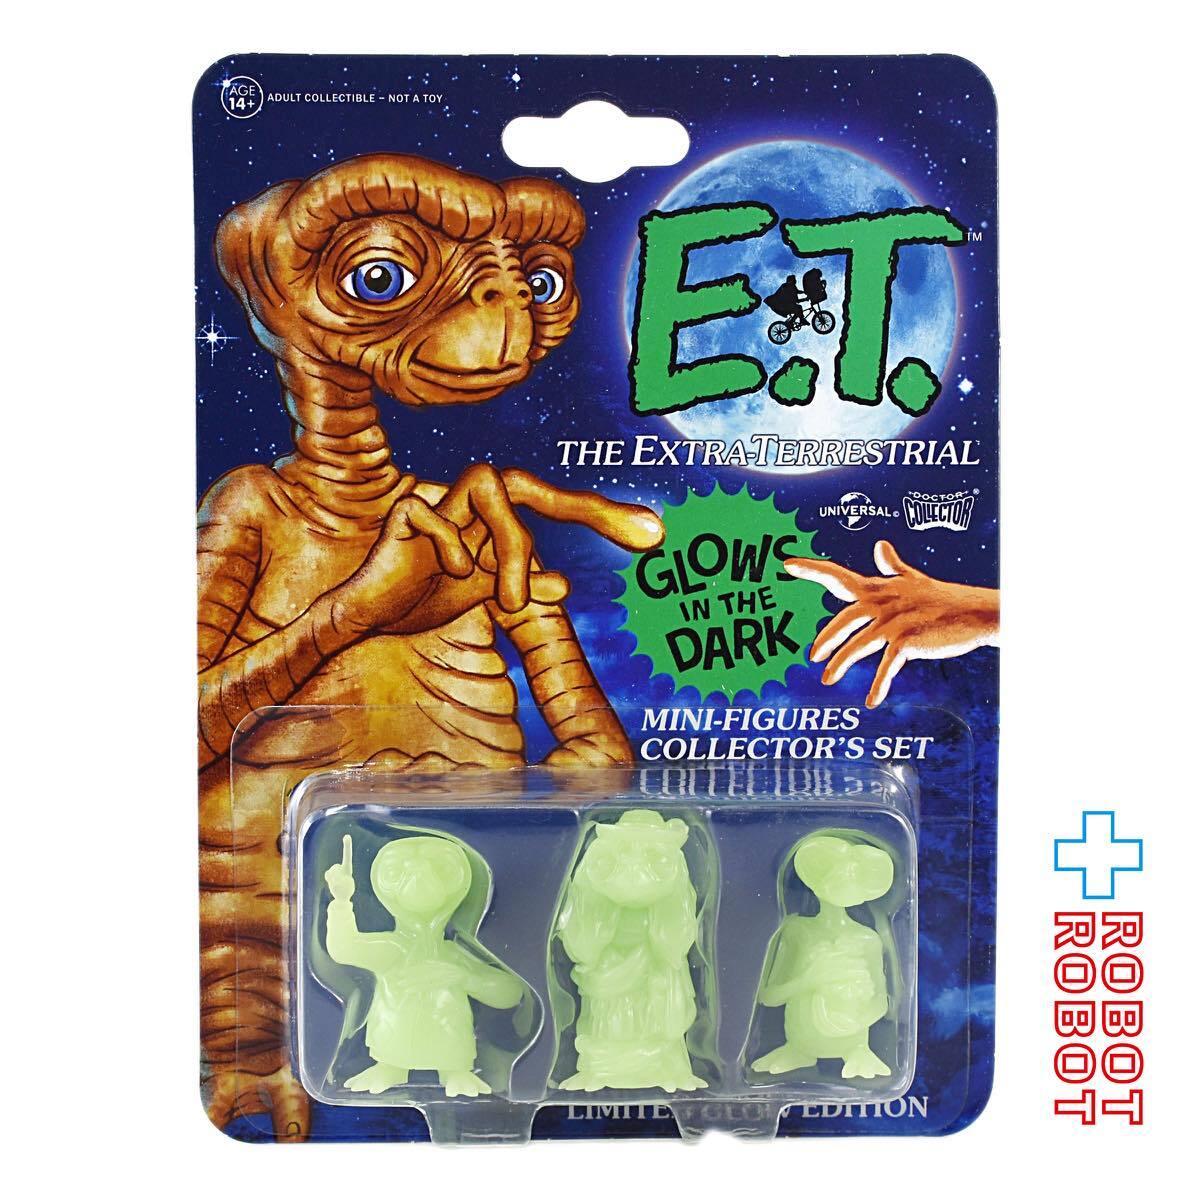 E.T. – ROBOTROBOT